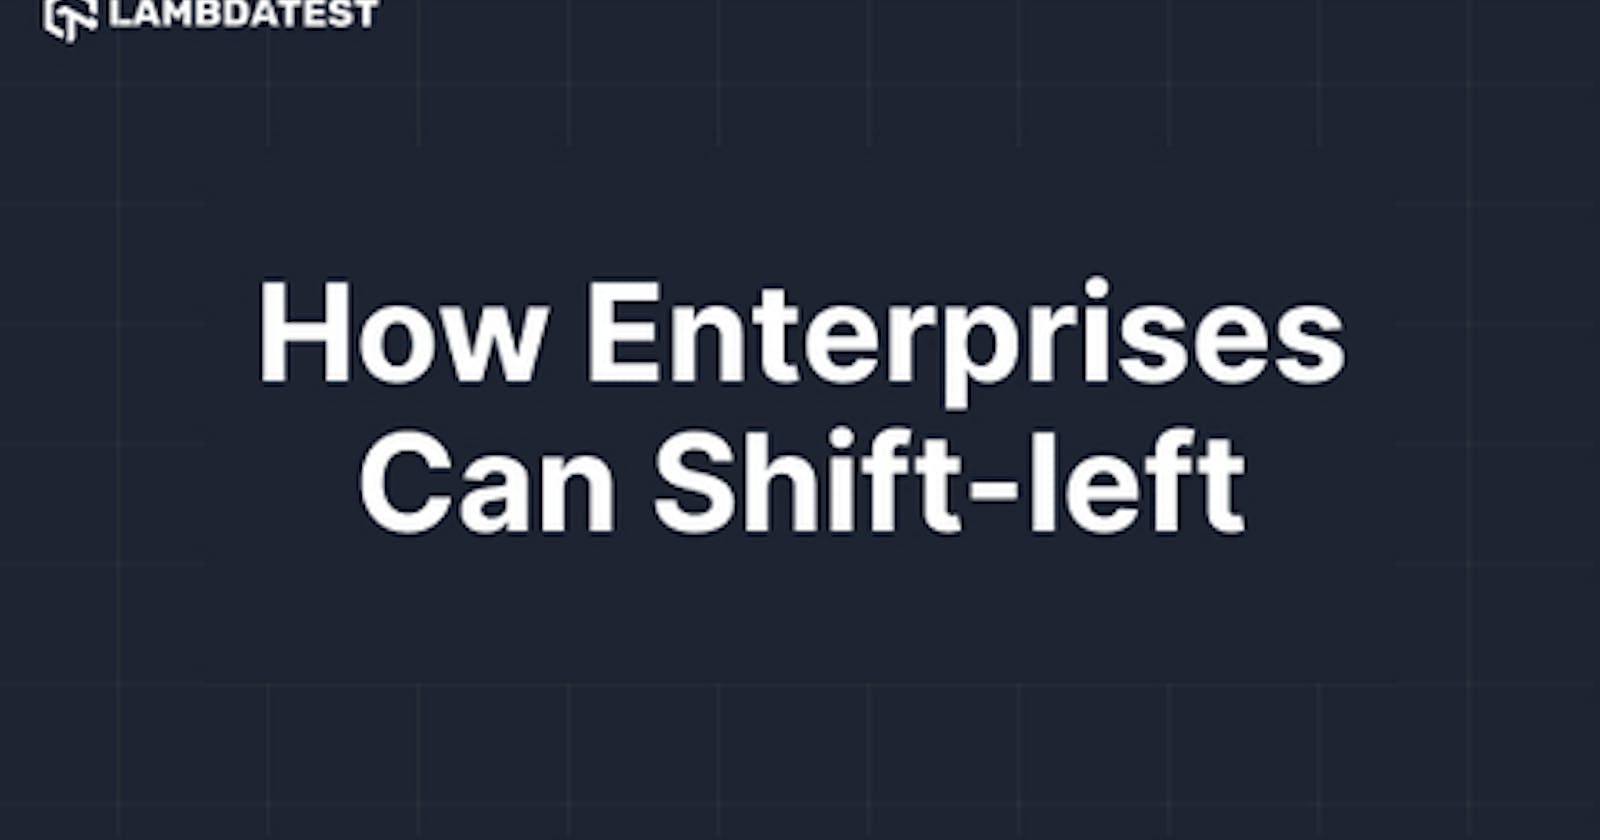 How enterprises can shift left?